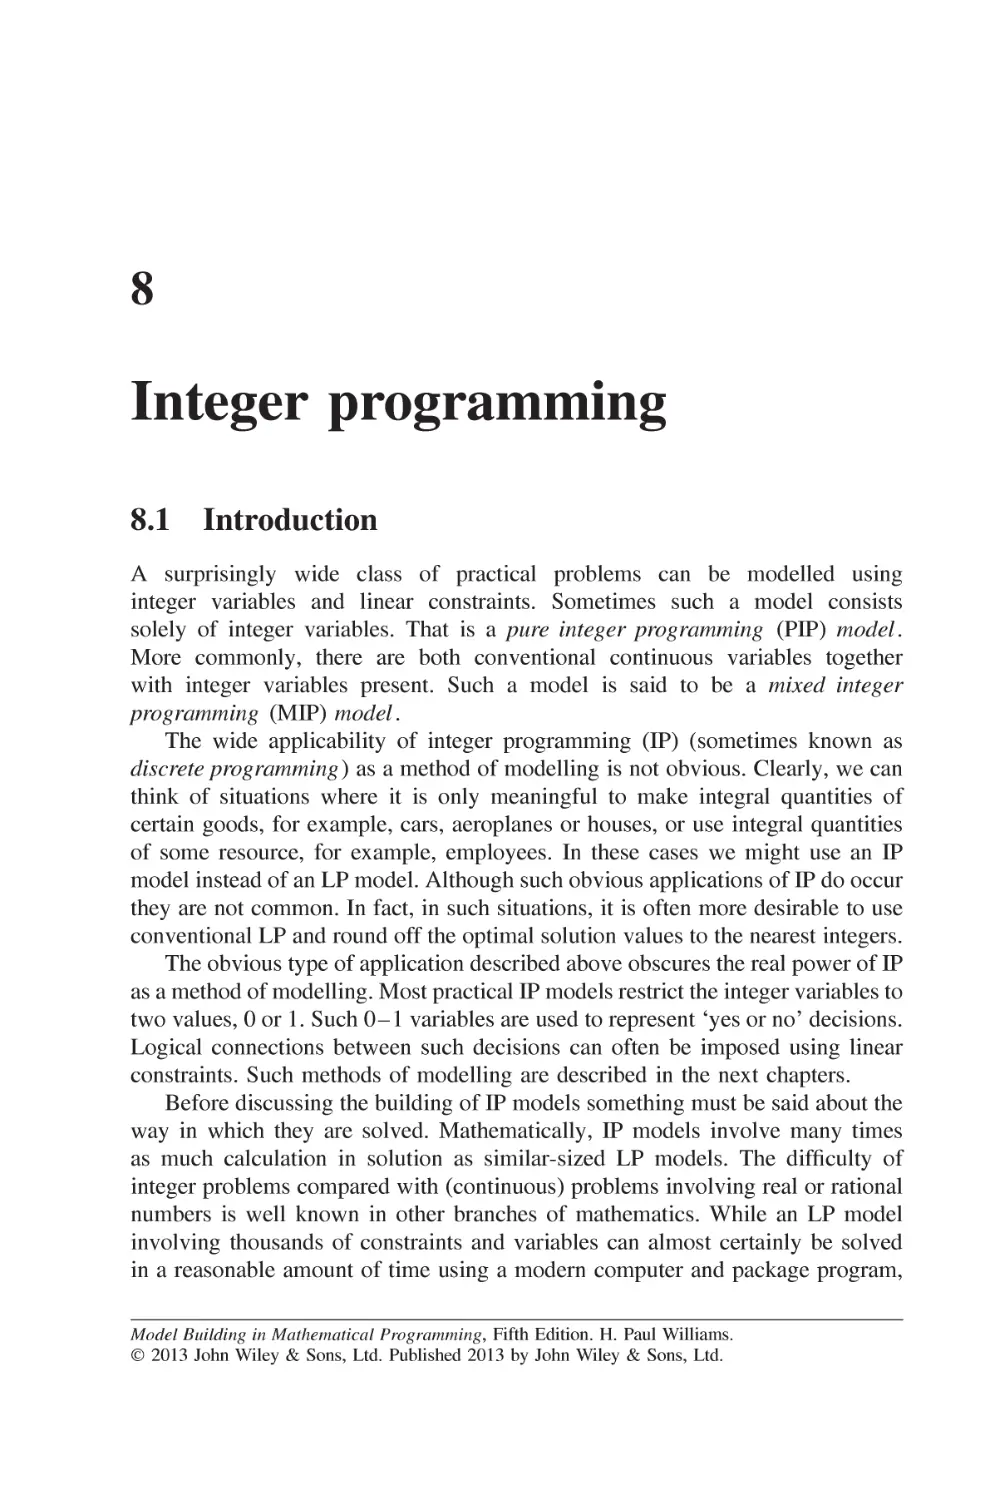 Chapter 8 Integer programming